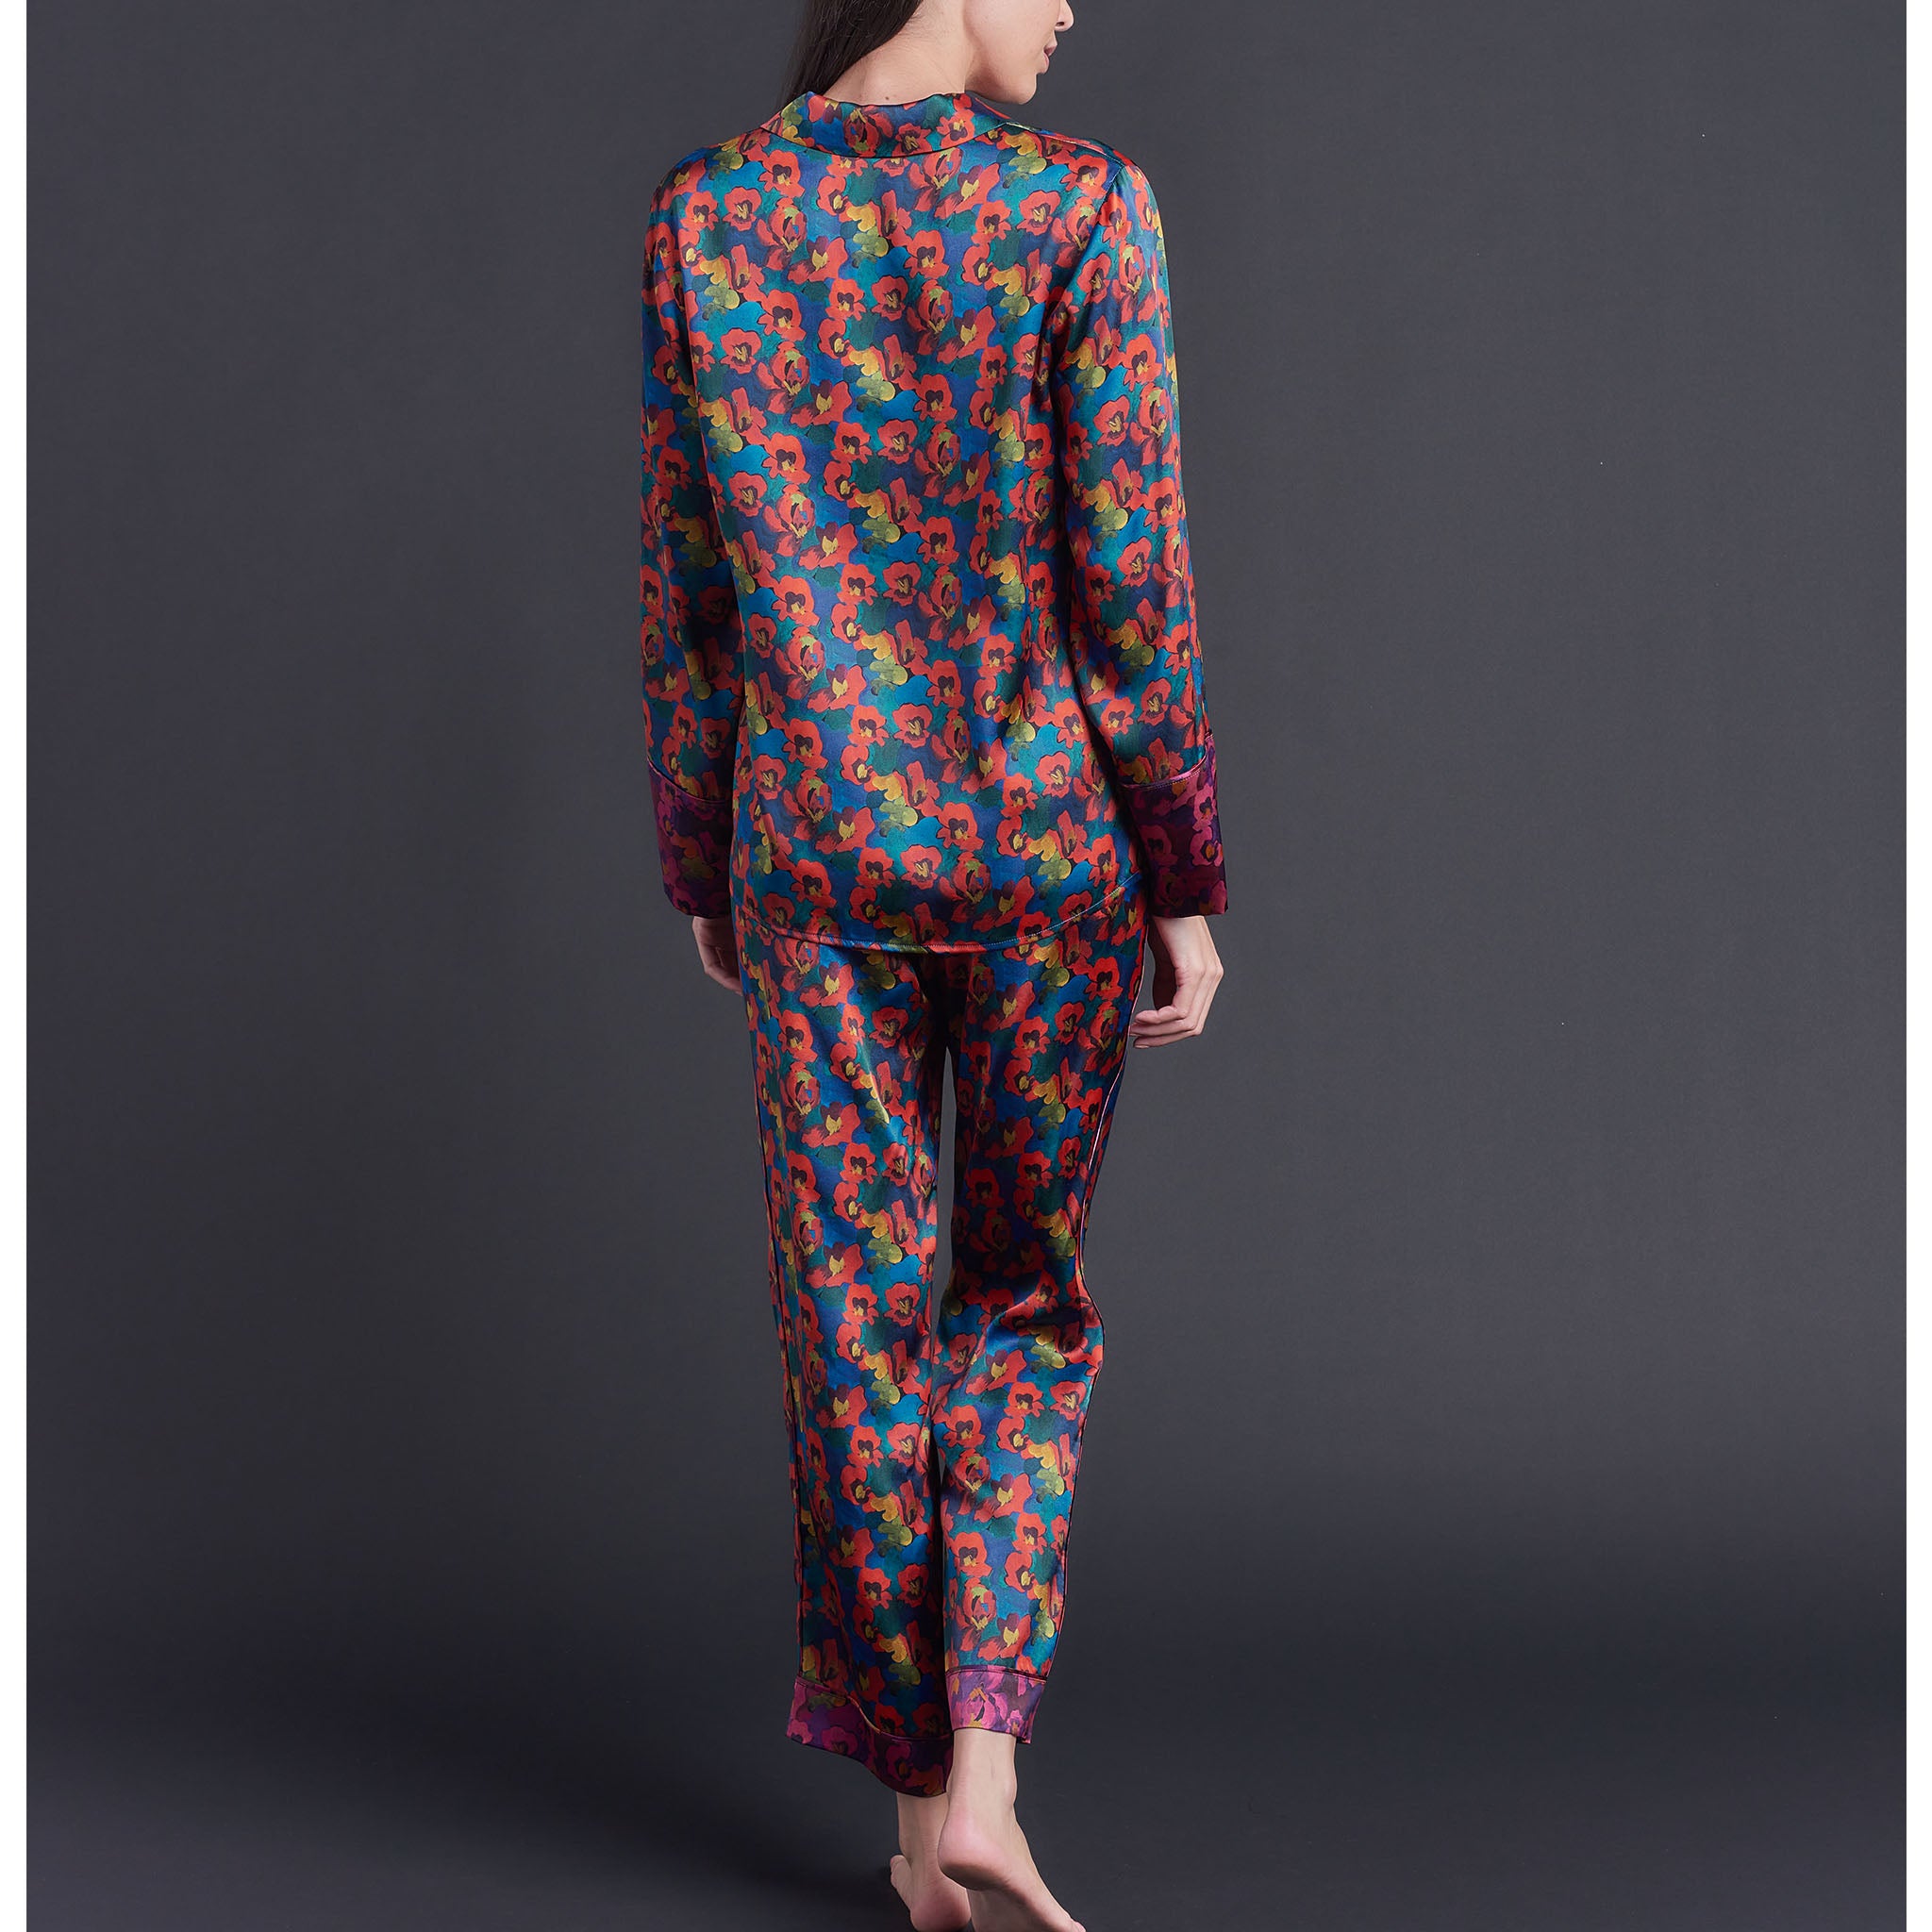 Annabel Pajama Top in Gemma Rose Liberty Print Silk Charmeuse